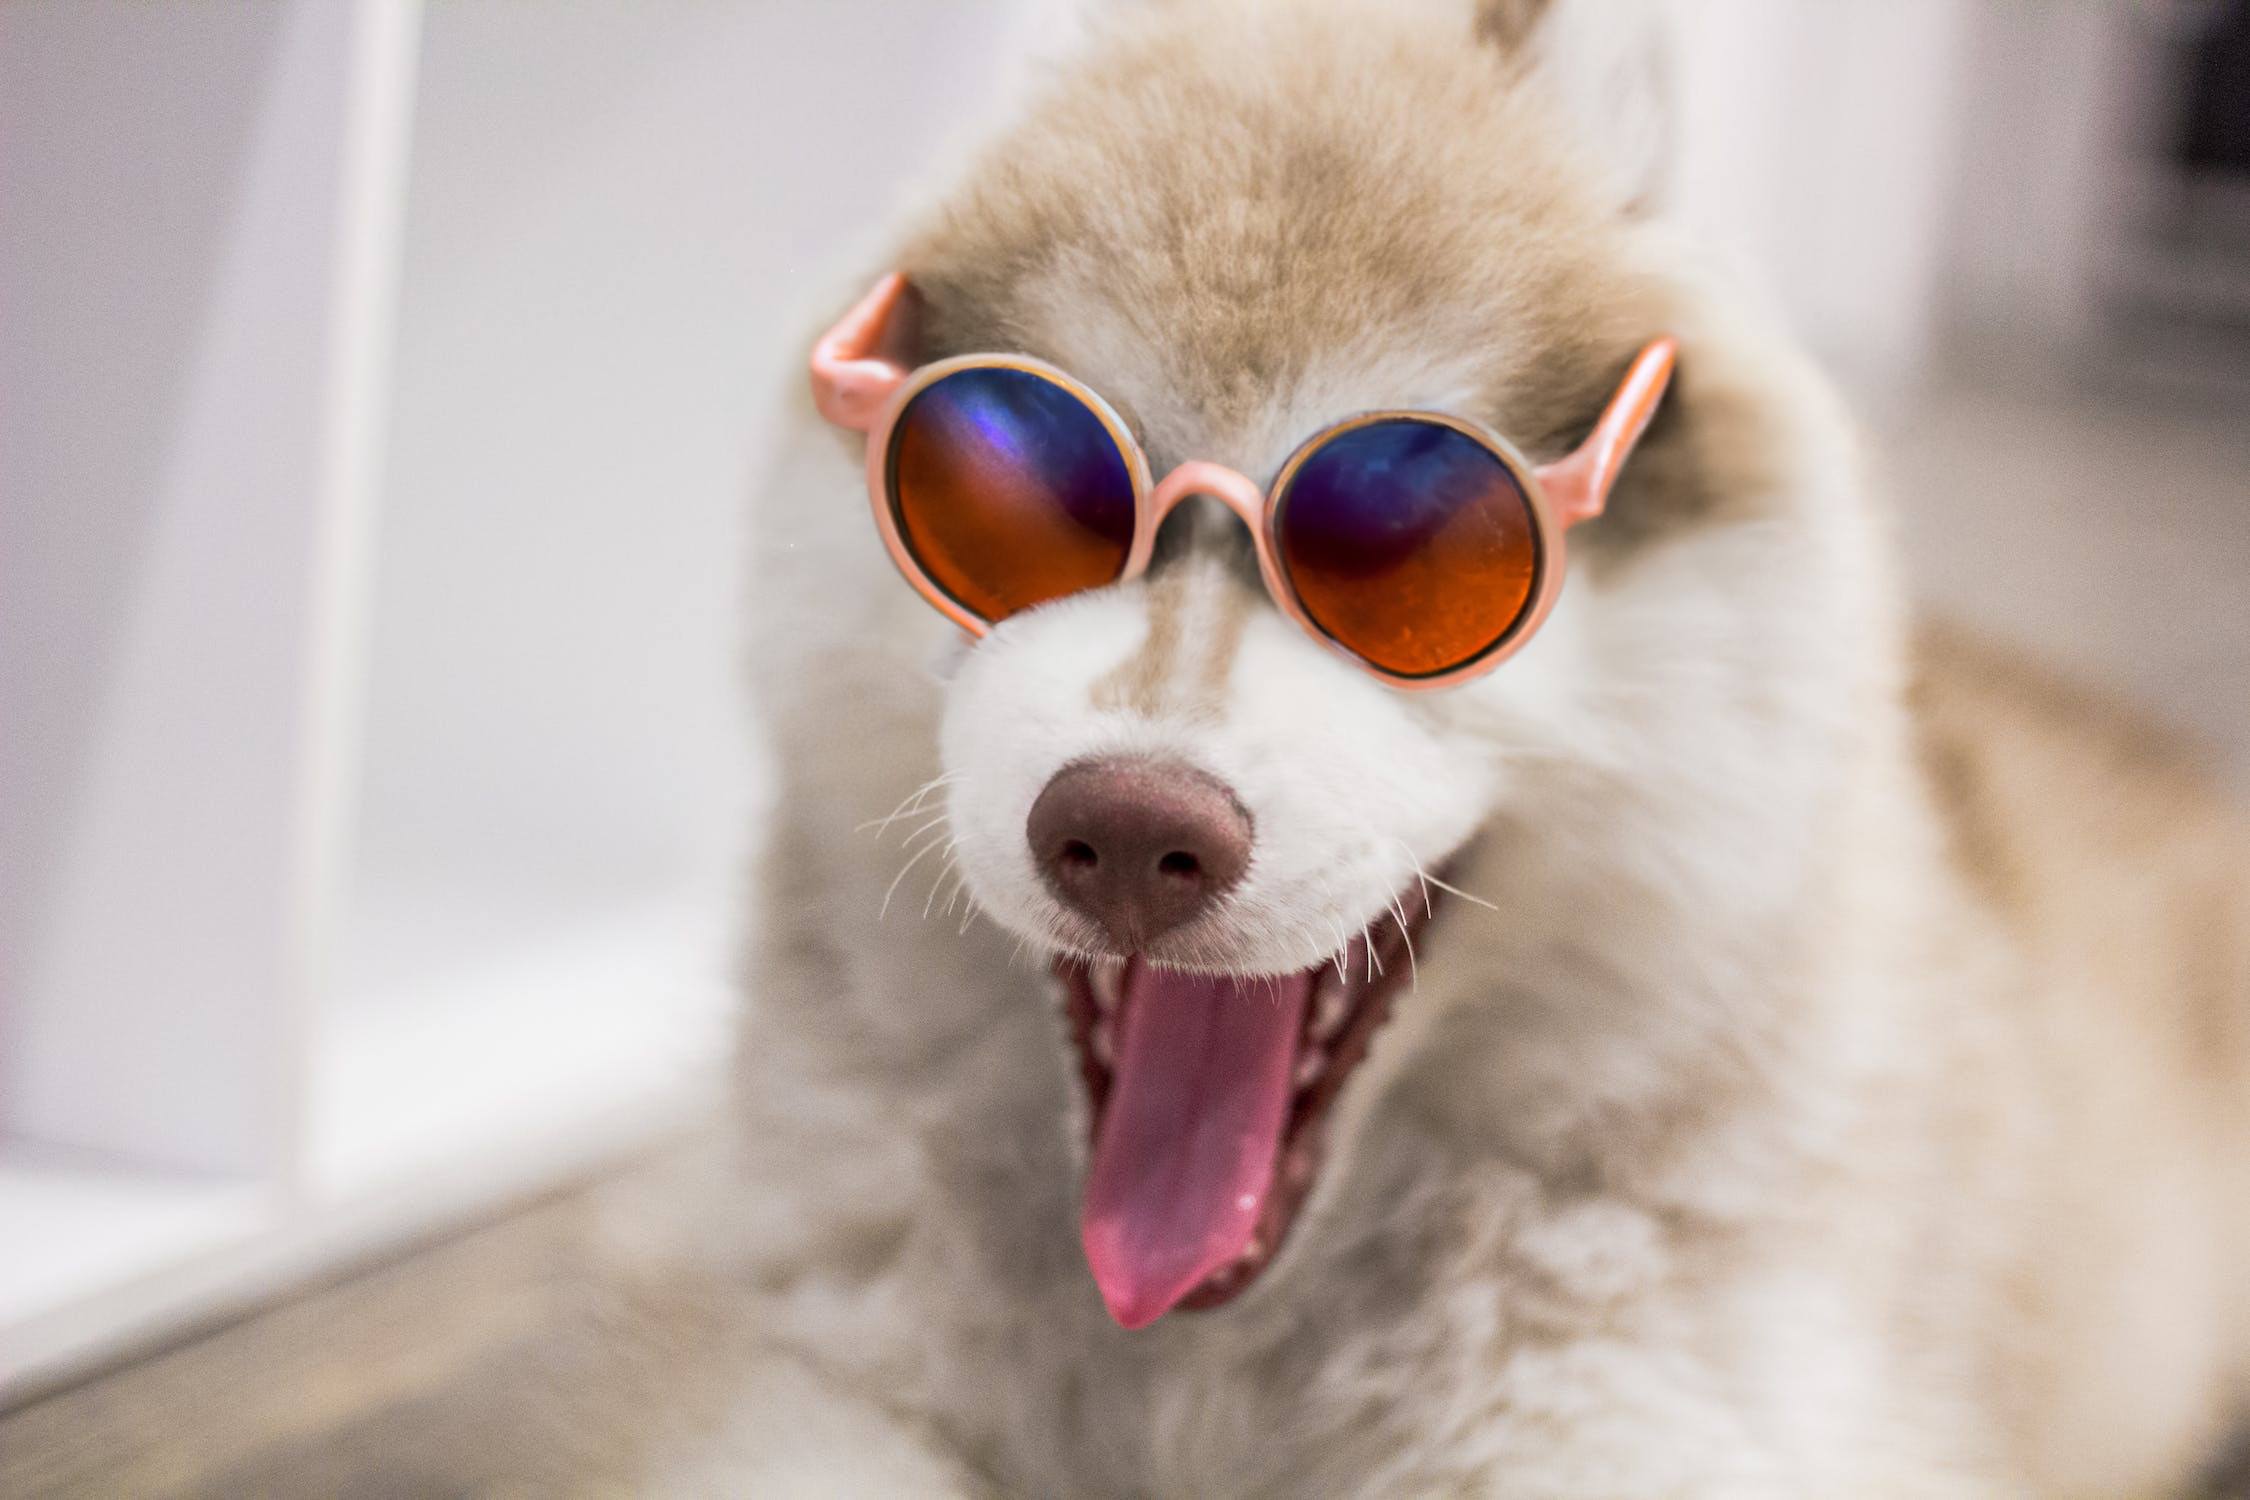 A husky wearing orange sunglasses